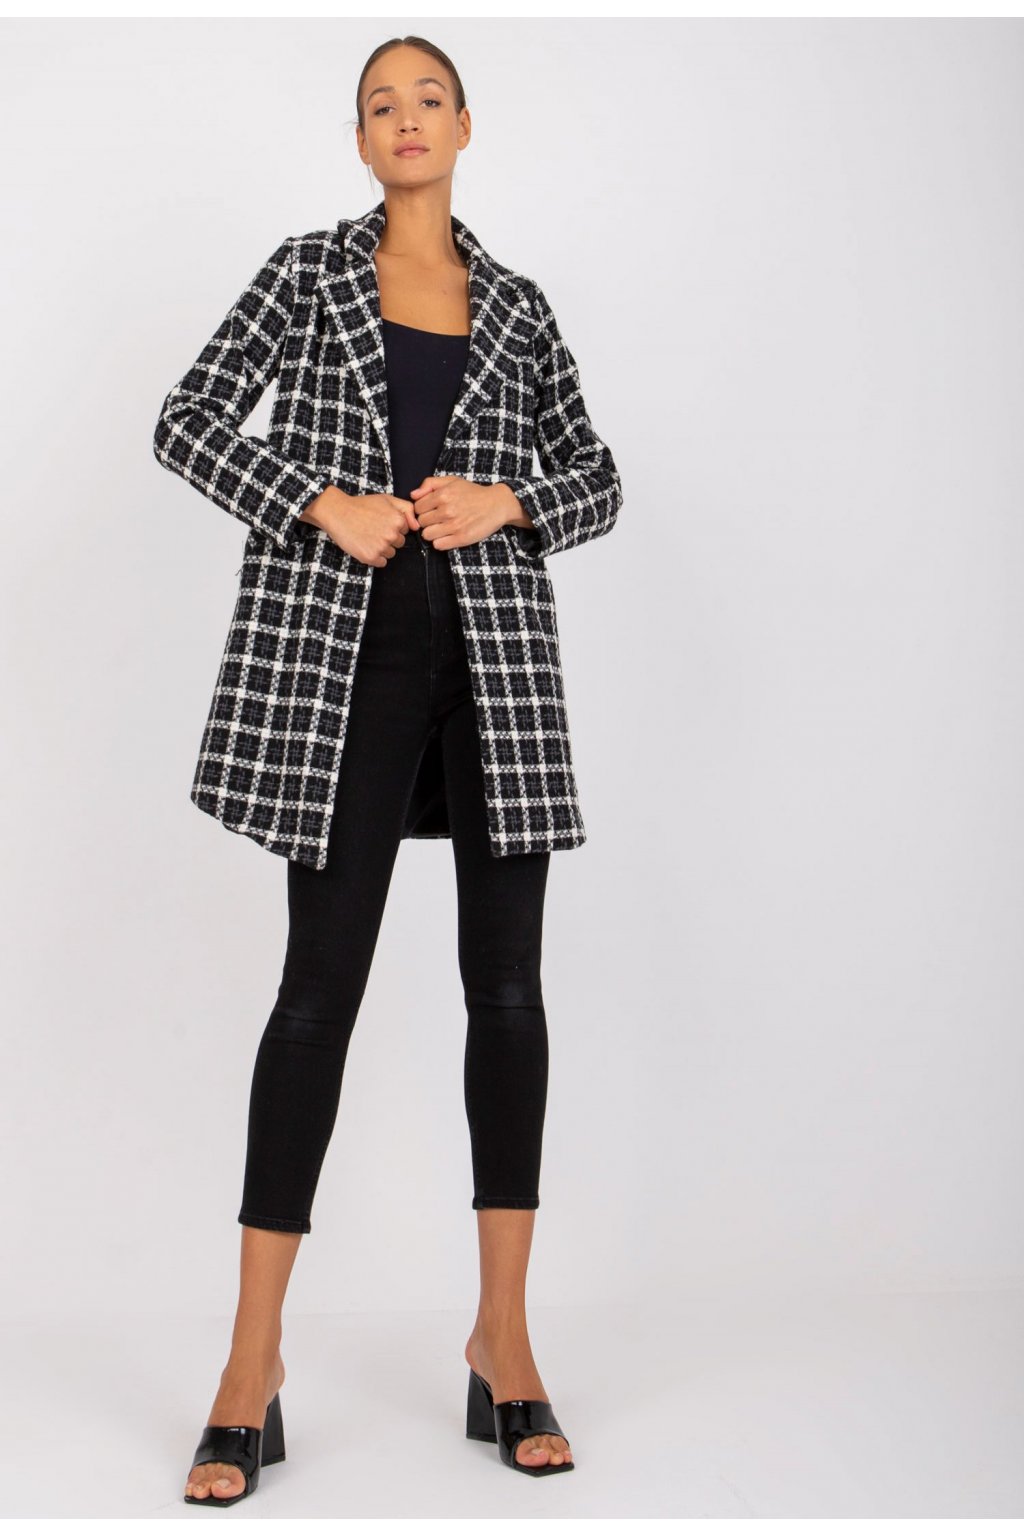 Čierno - biely dámsky kabát | FASHIONSUGAR e-shop